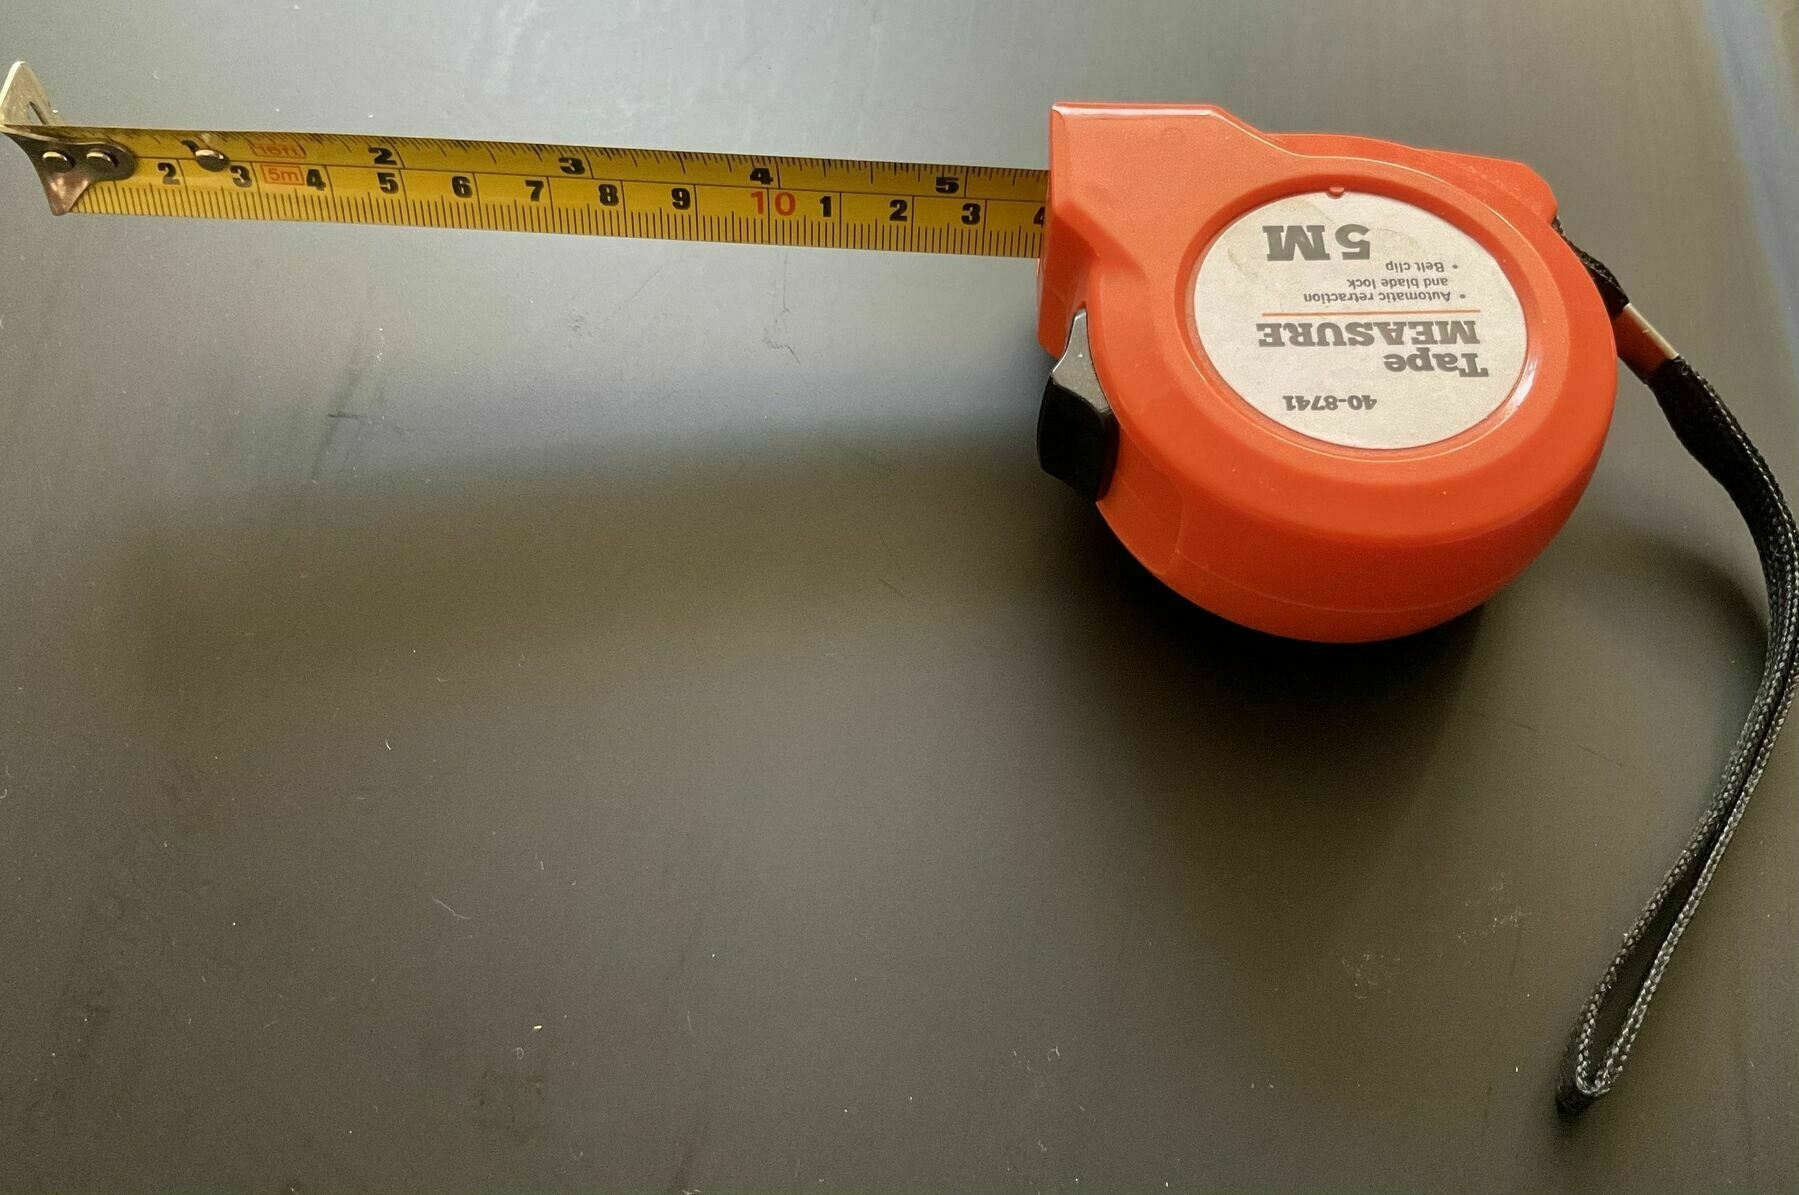 An orange tape measure 